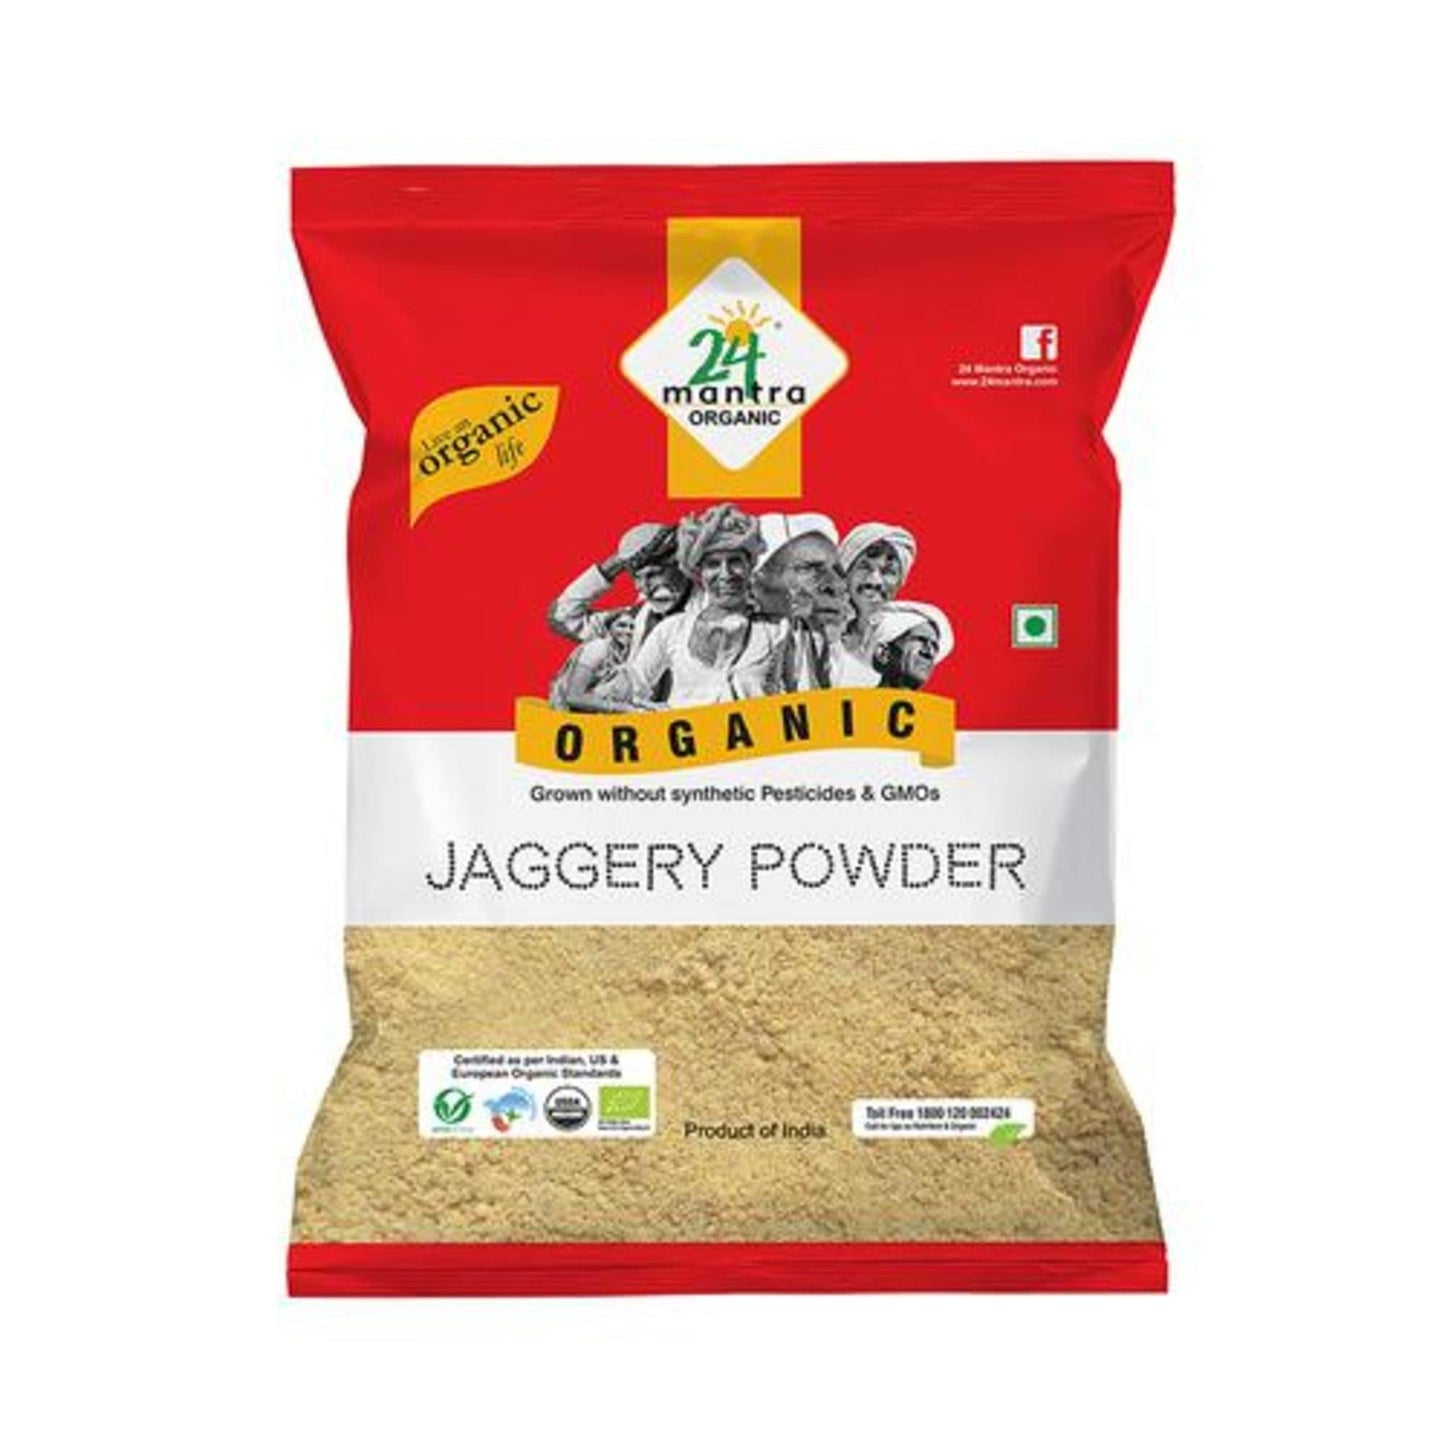 24 Mantra Organic Jaggery Powder.